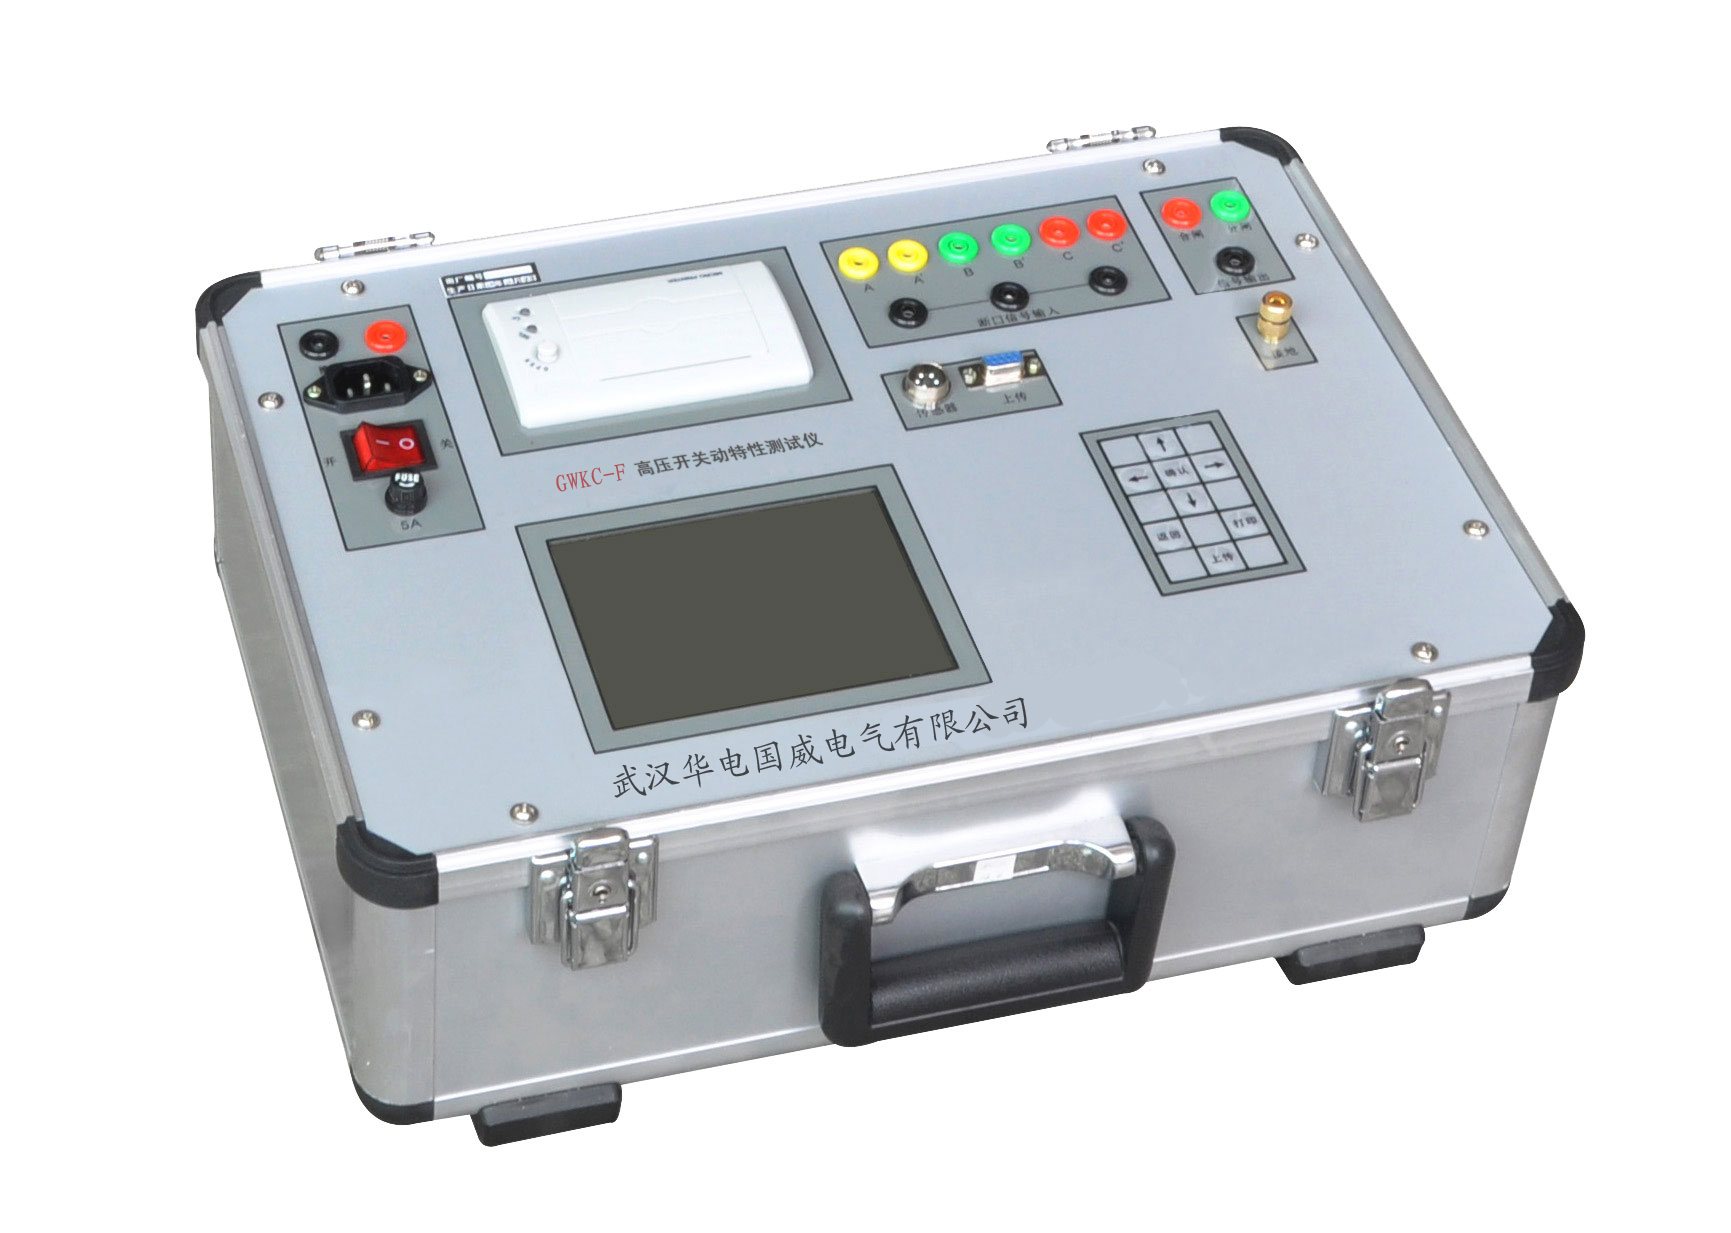 GWKC-F高压开关机械特性测试仪